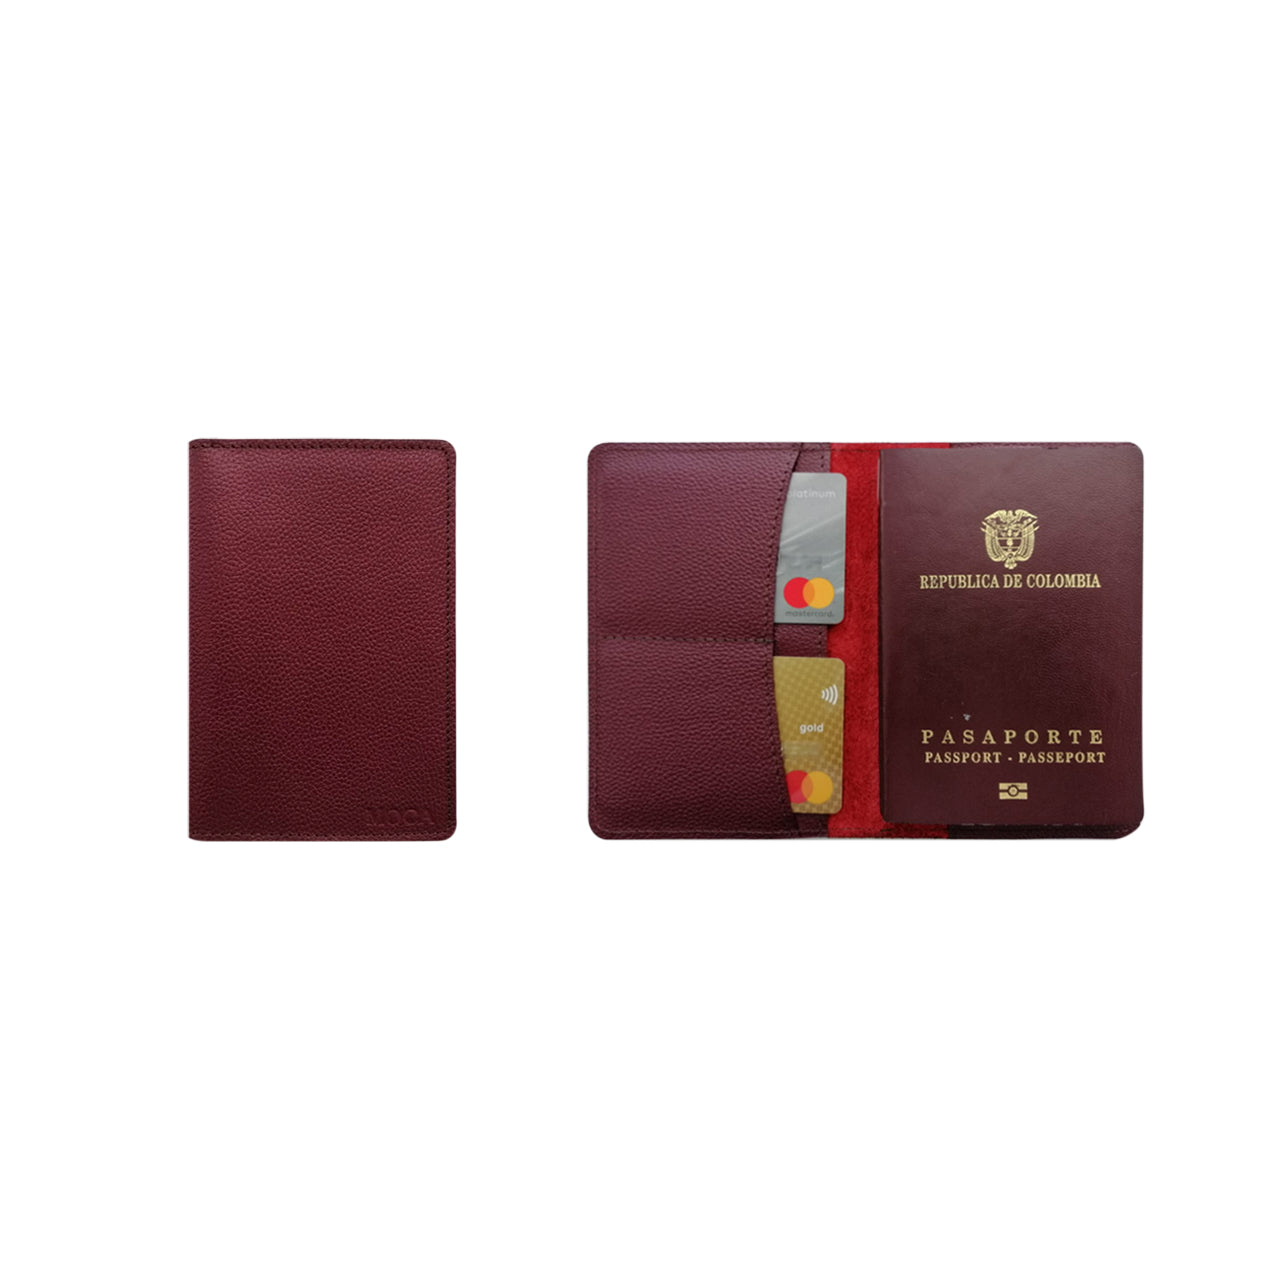 Porta pasaporte Noth